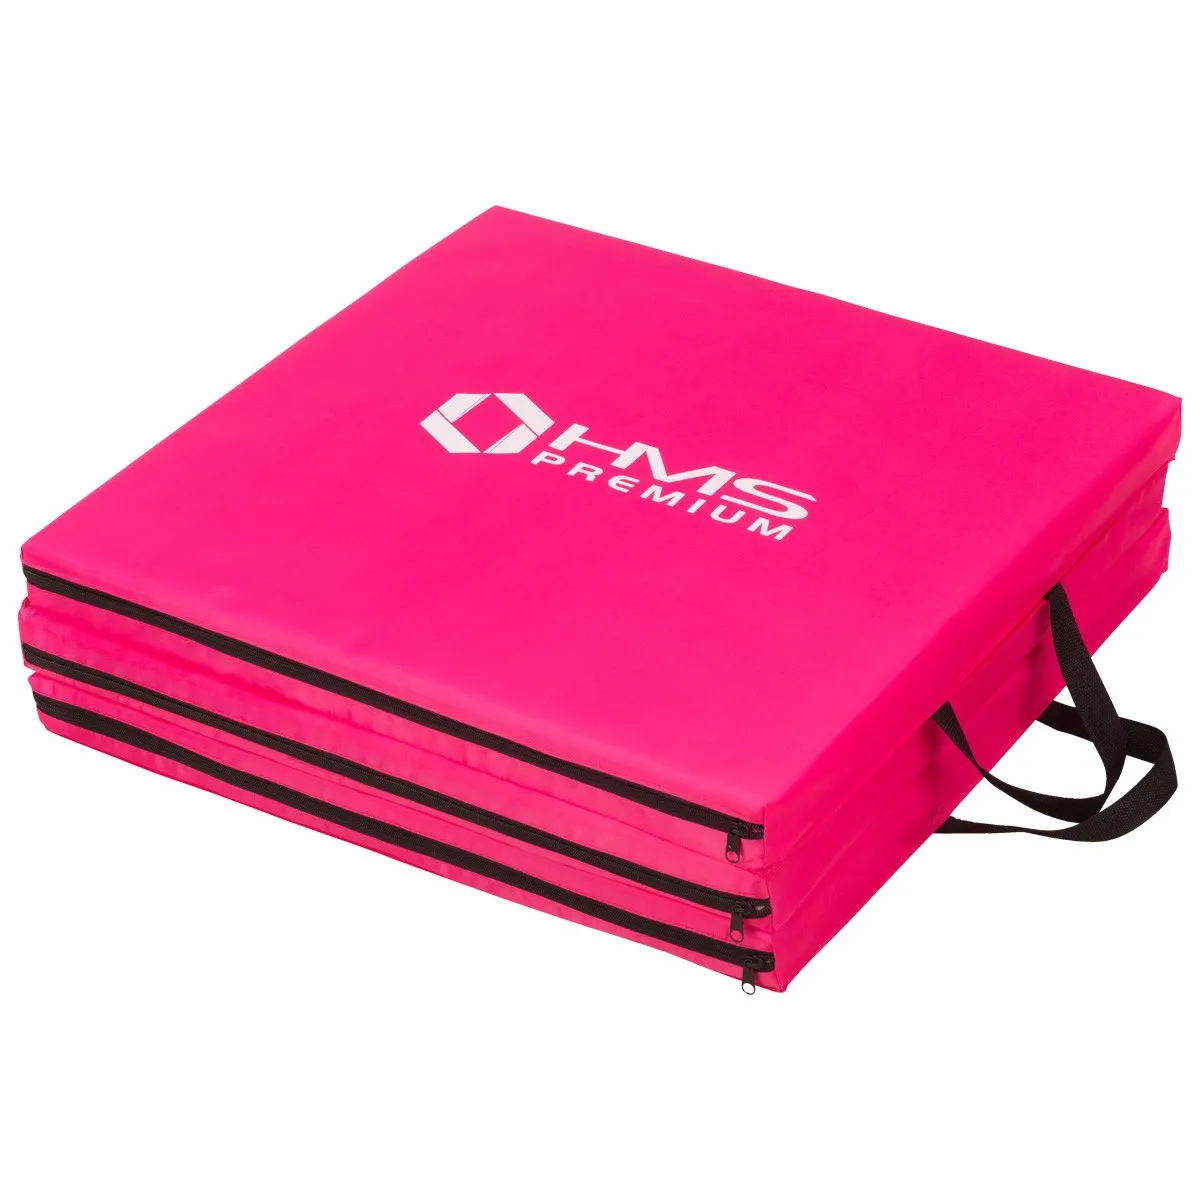 Foldable gymnastics mat pink 180x60 cm